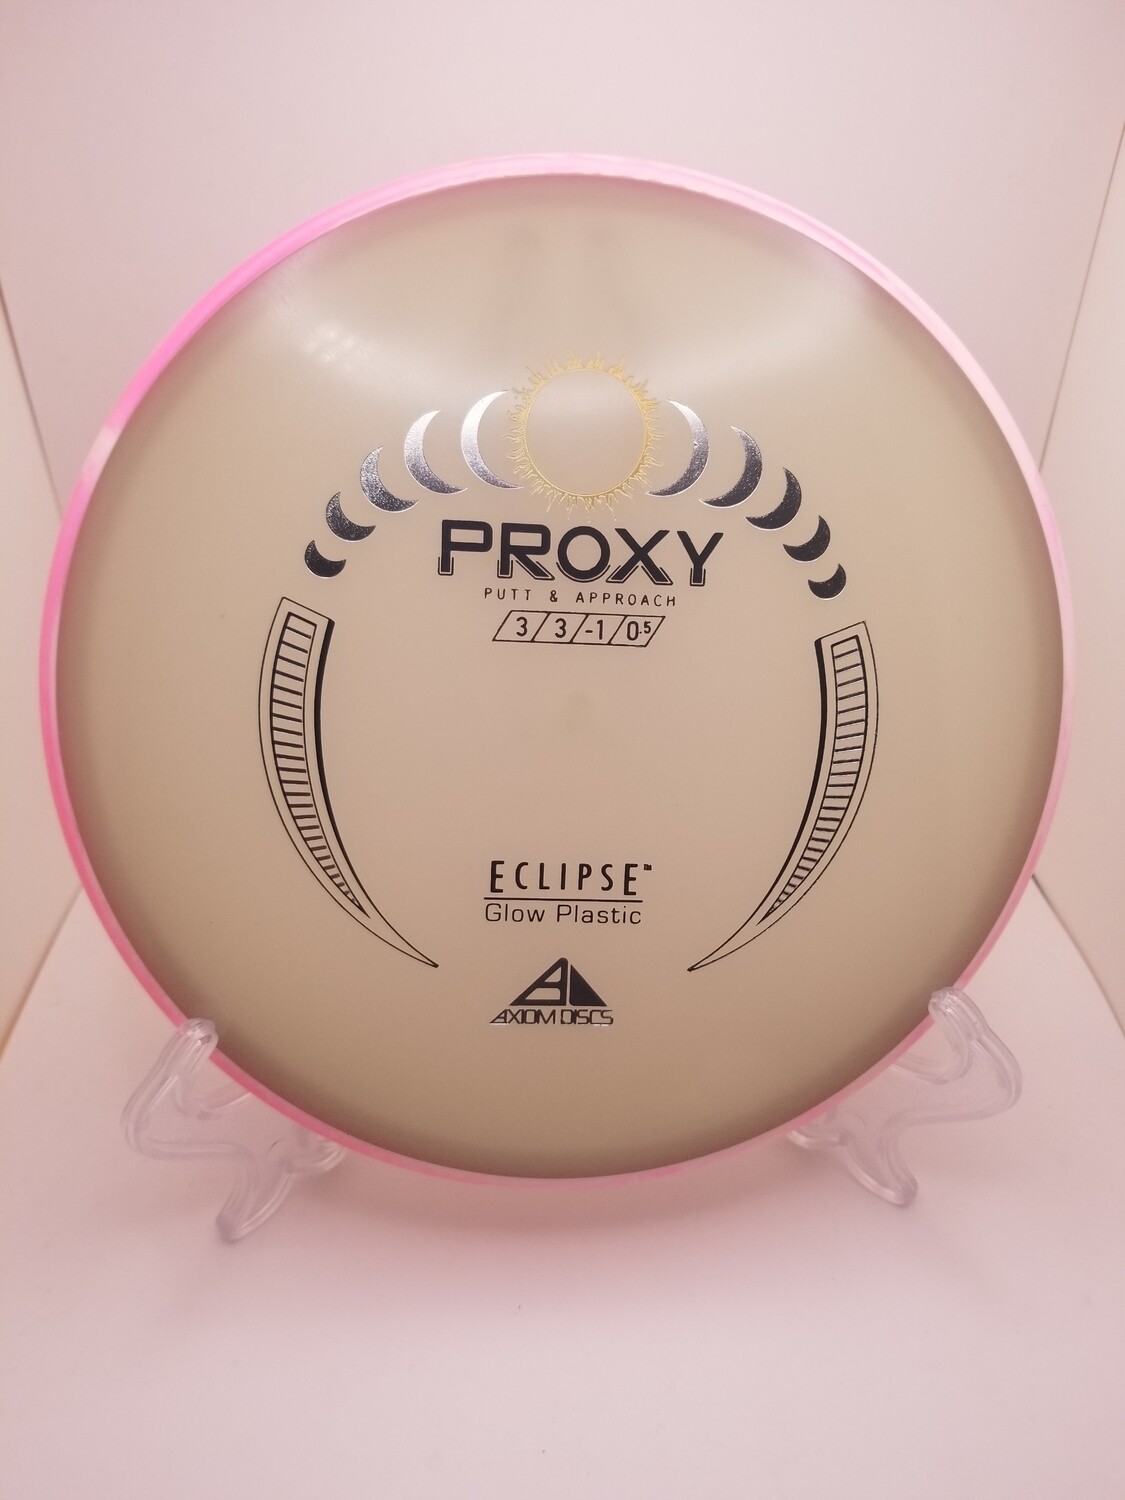 Axiom Discs Proxy Glow Eclipse Stamped with Pink/White Swirly Rim 172g